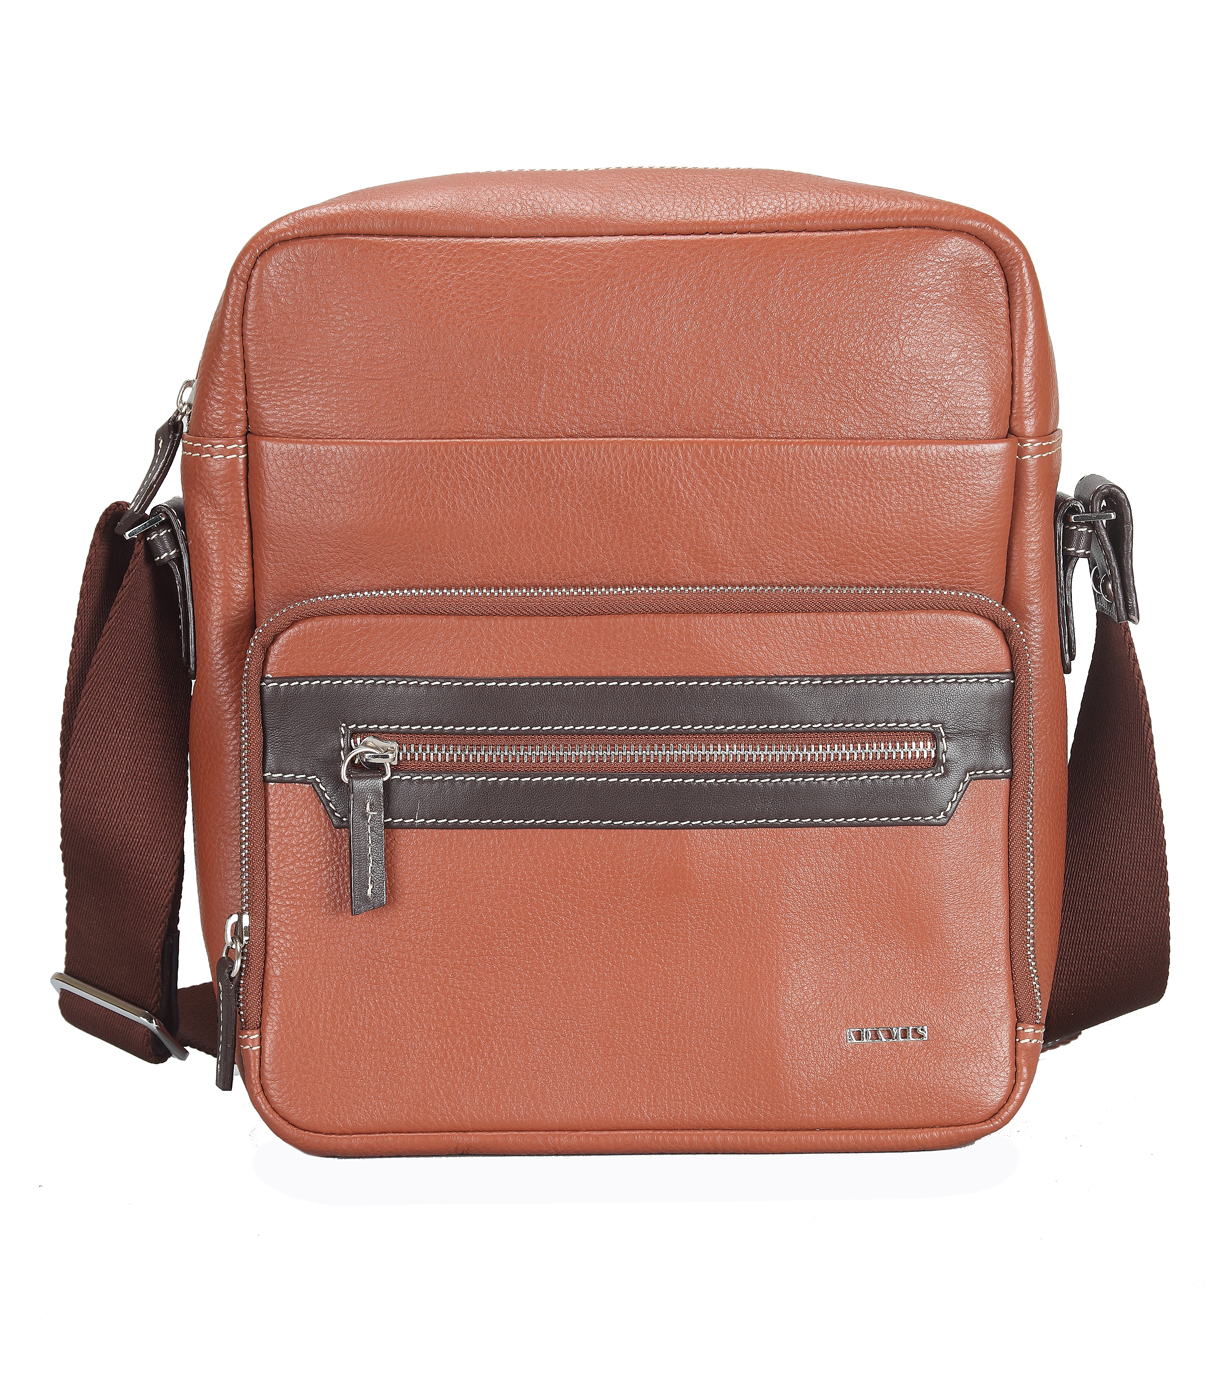 Stephano Leather Bag(Tan)P29